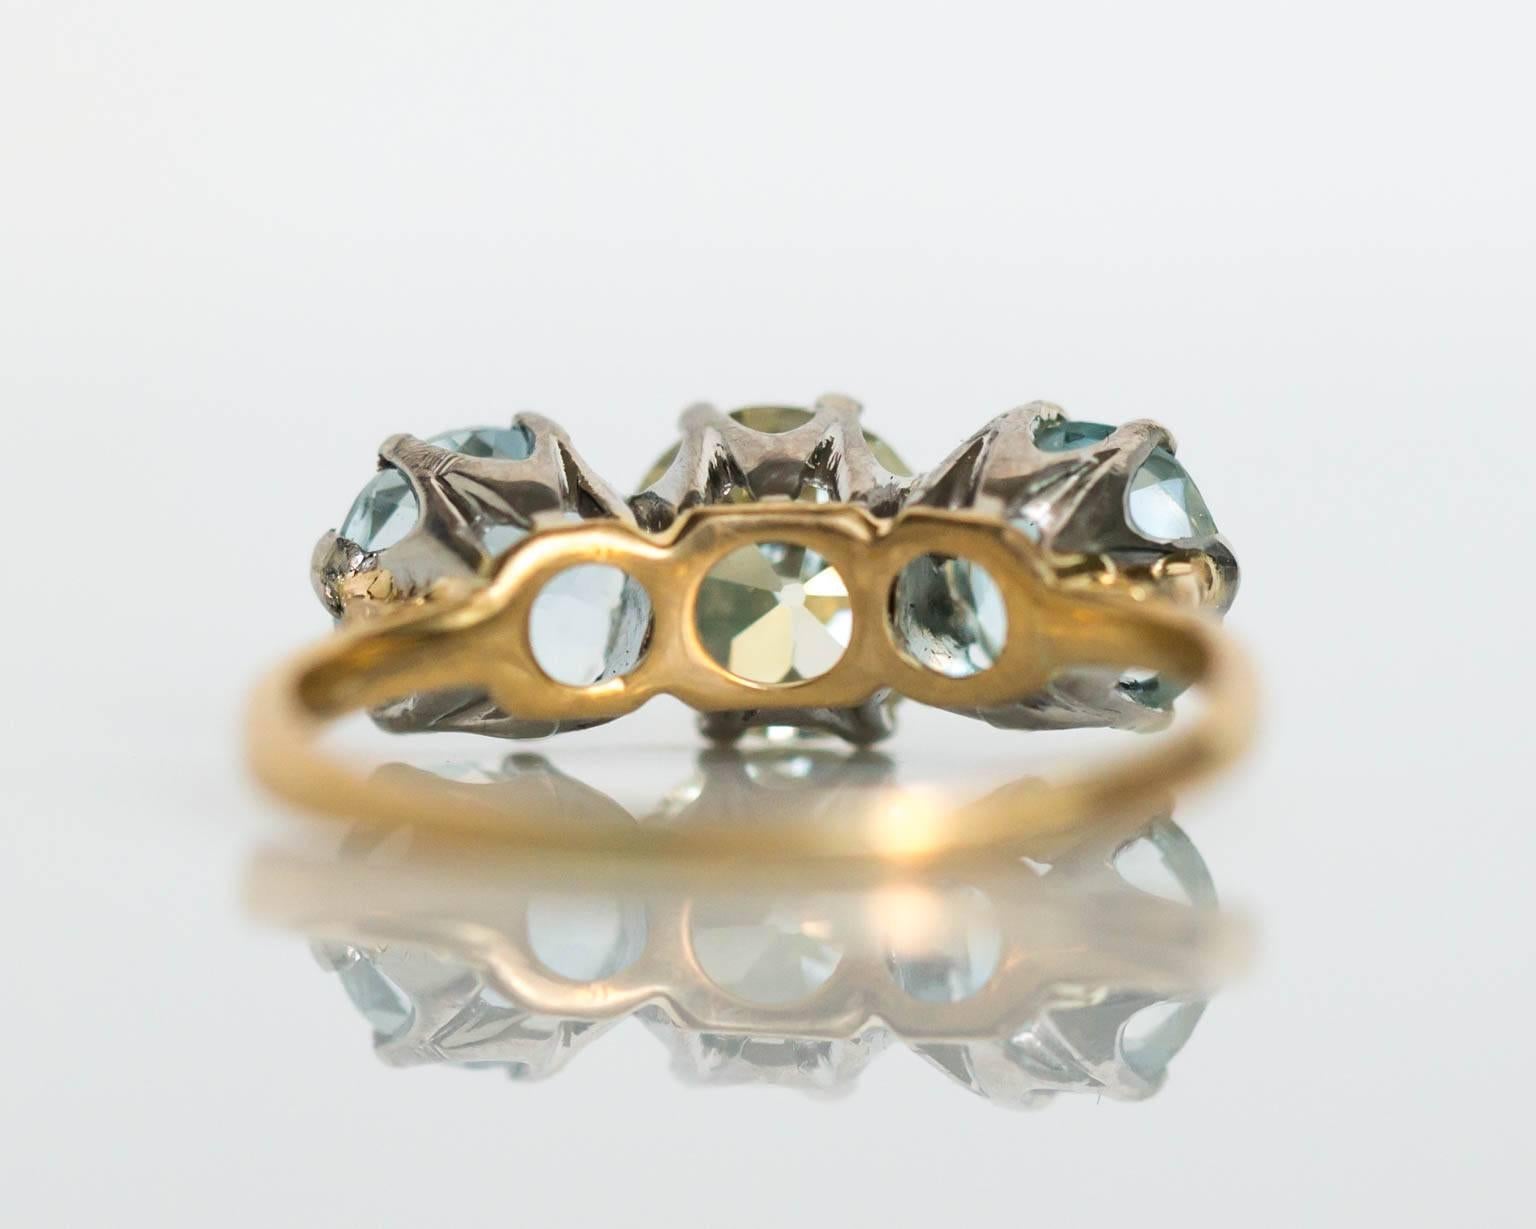 Women's 1910 Edwardian Gold Engagement Ring with 1.05 Carat Diamond and Aquamarines